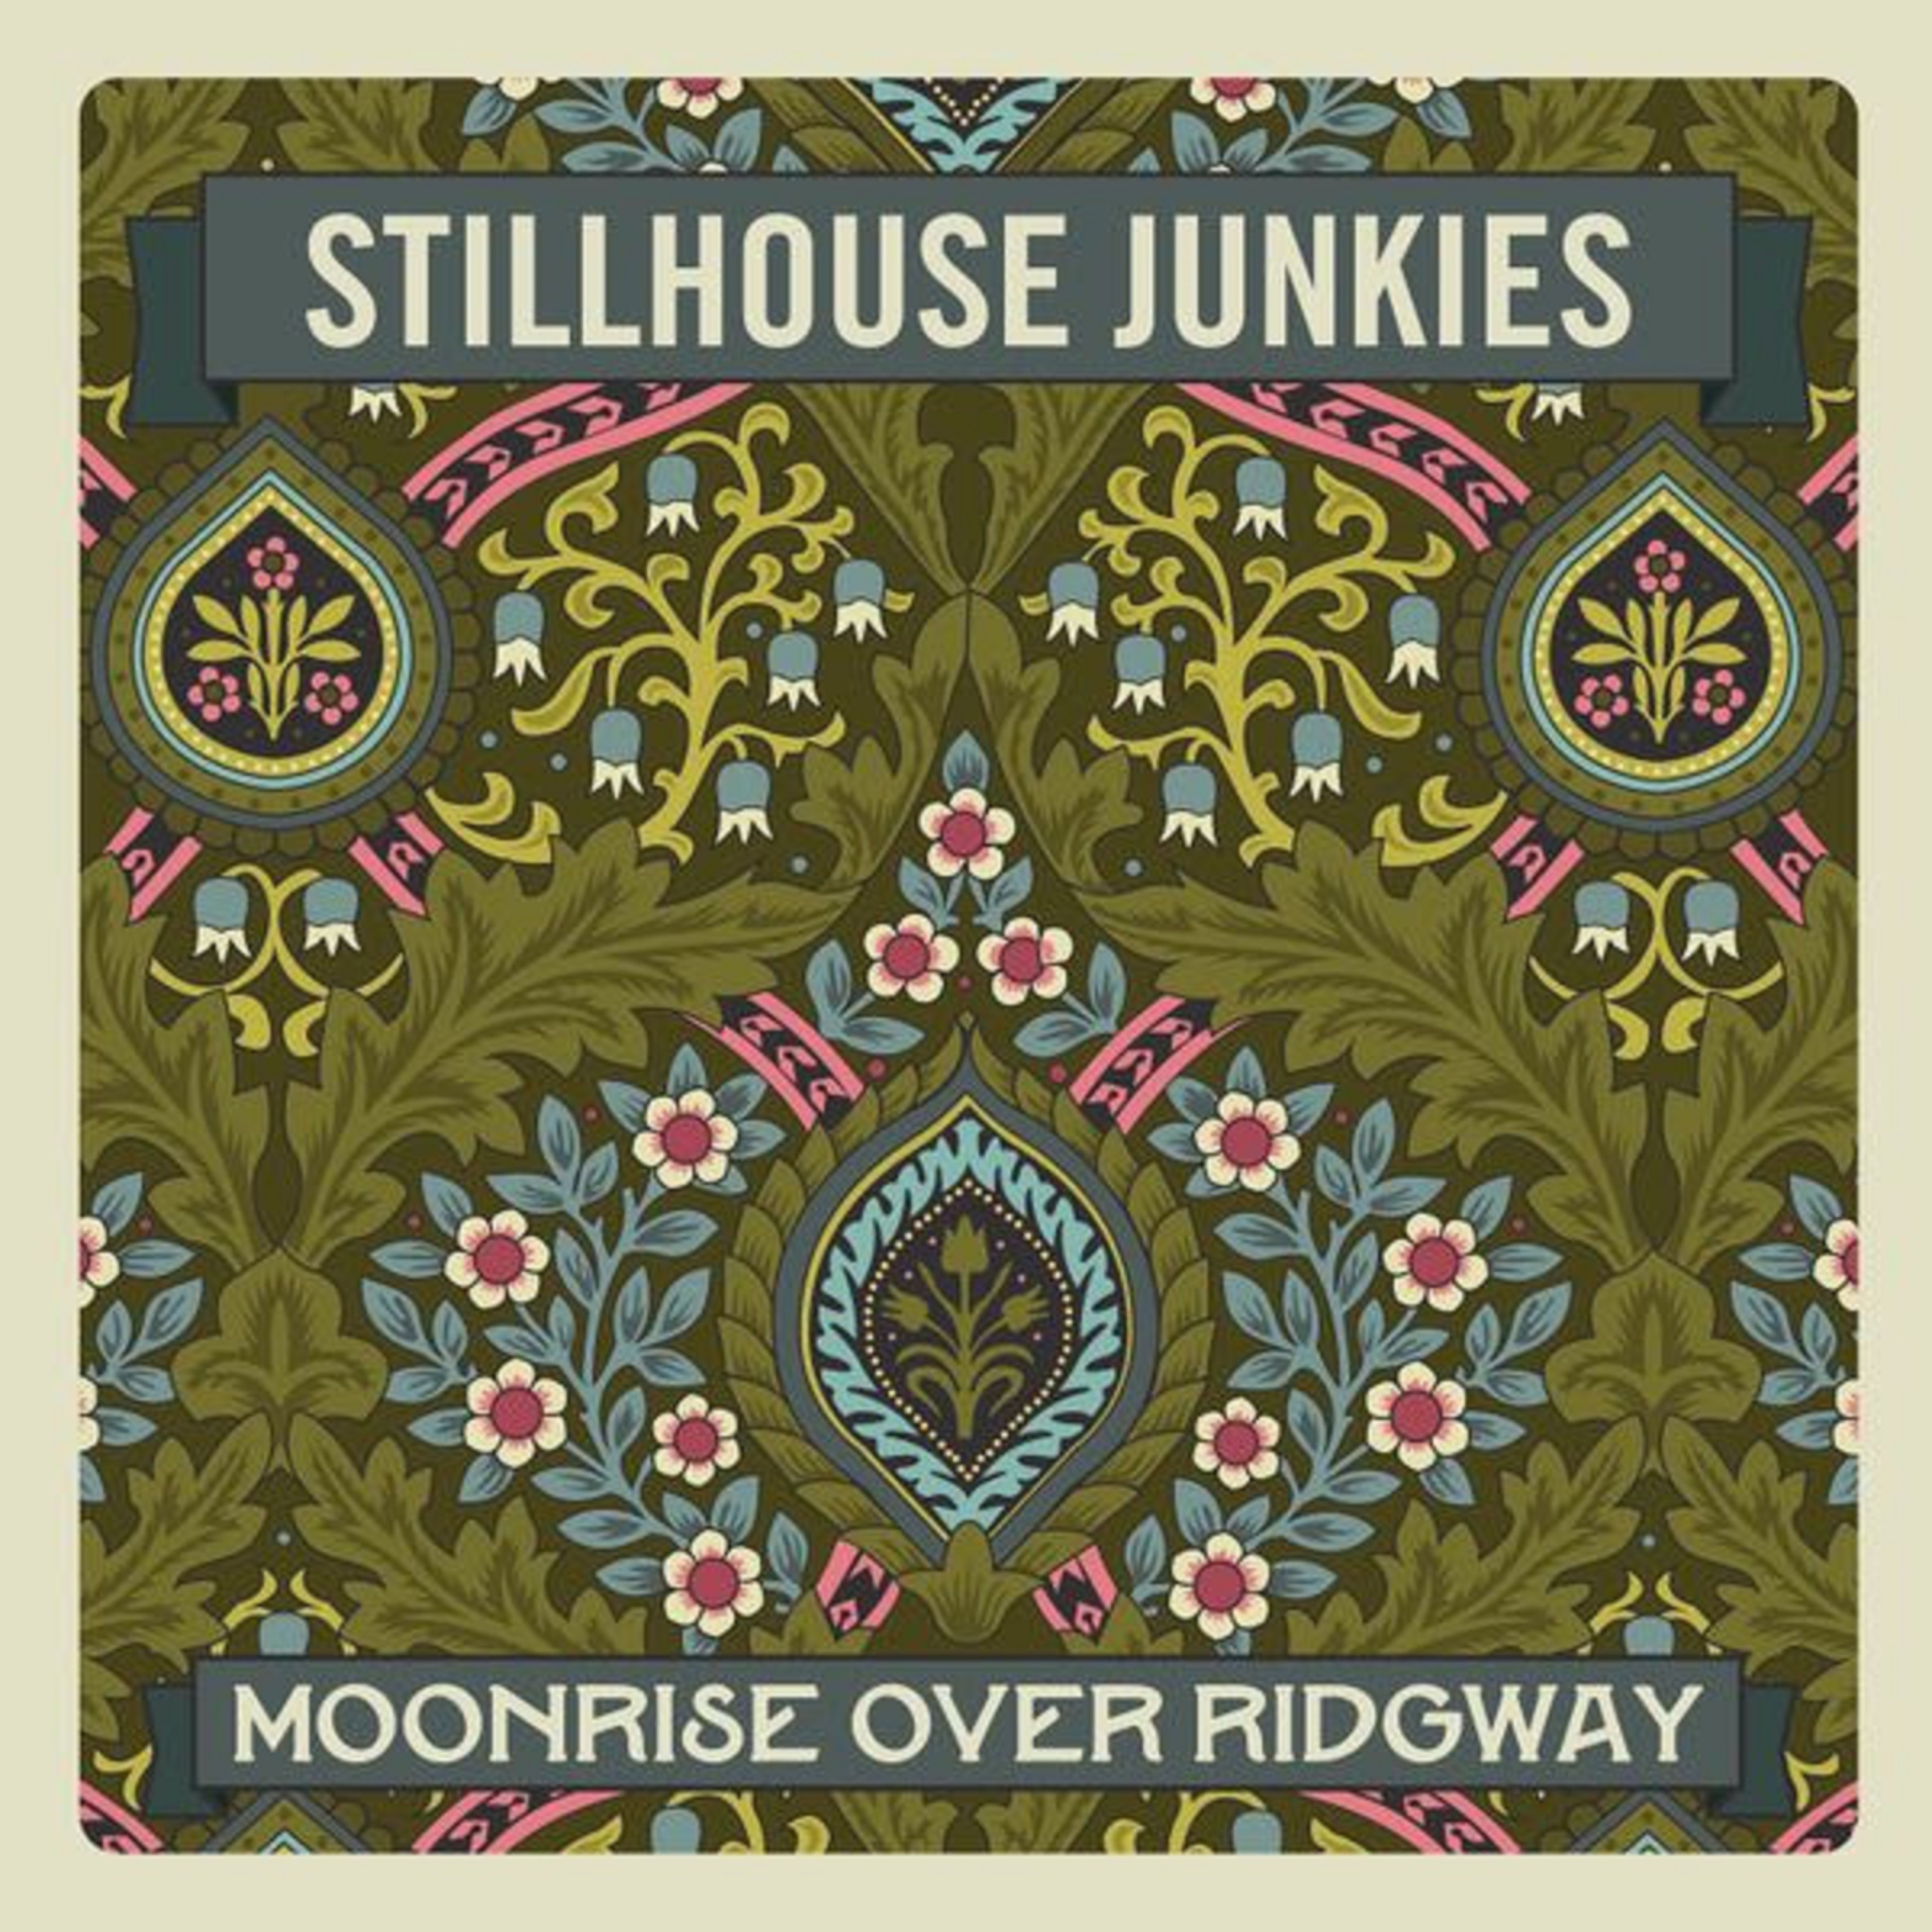 New single "Moonrise Over Ridgway" from Stillhouse Junkies